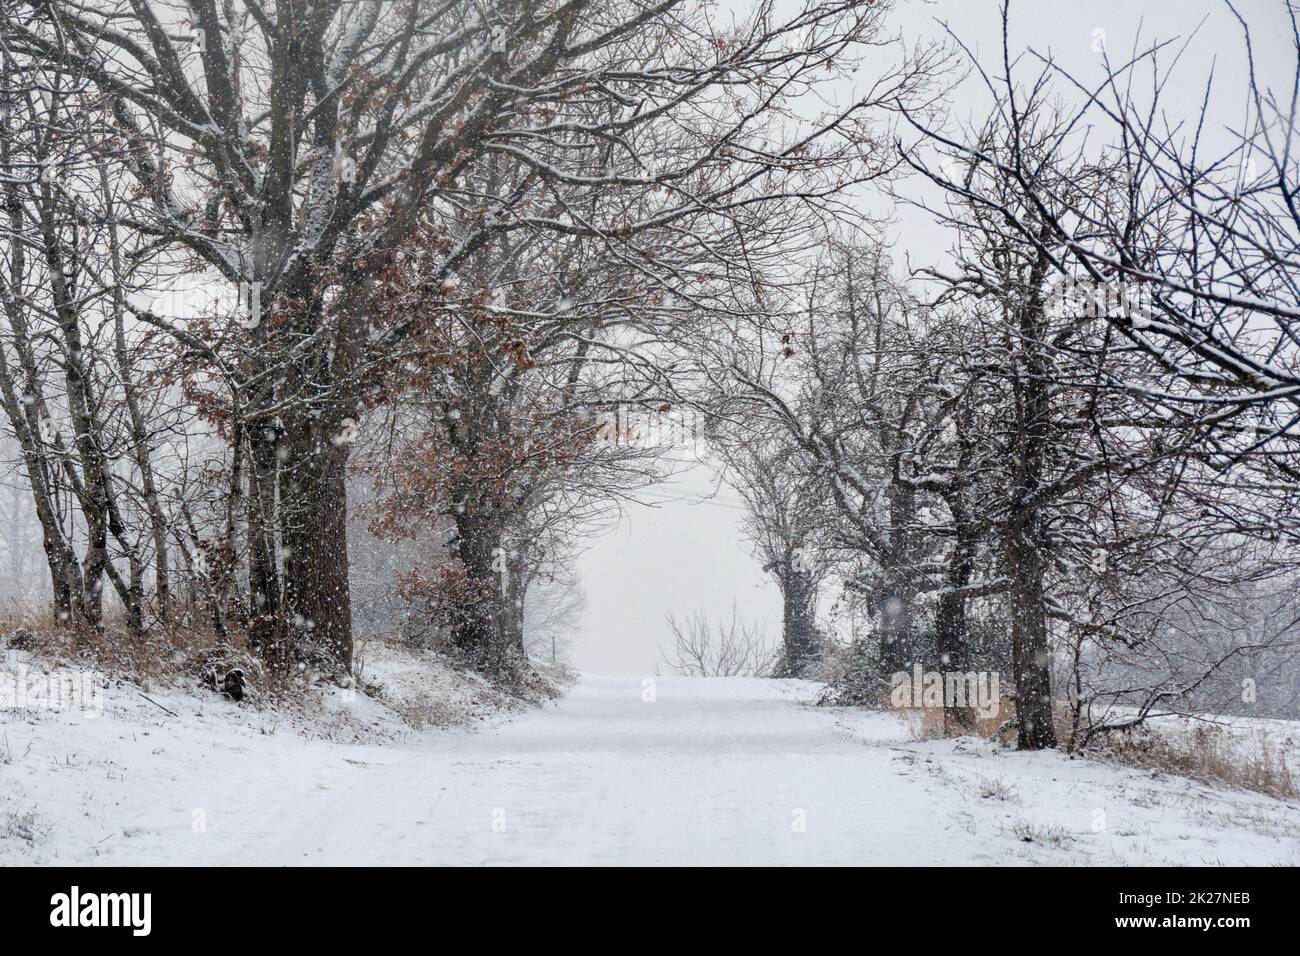 Wintertime  -  A snowy path through trees in heavy snowfall Stock Photo